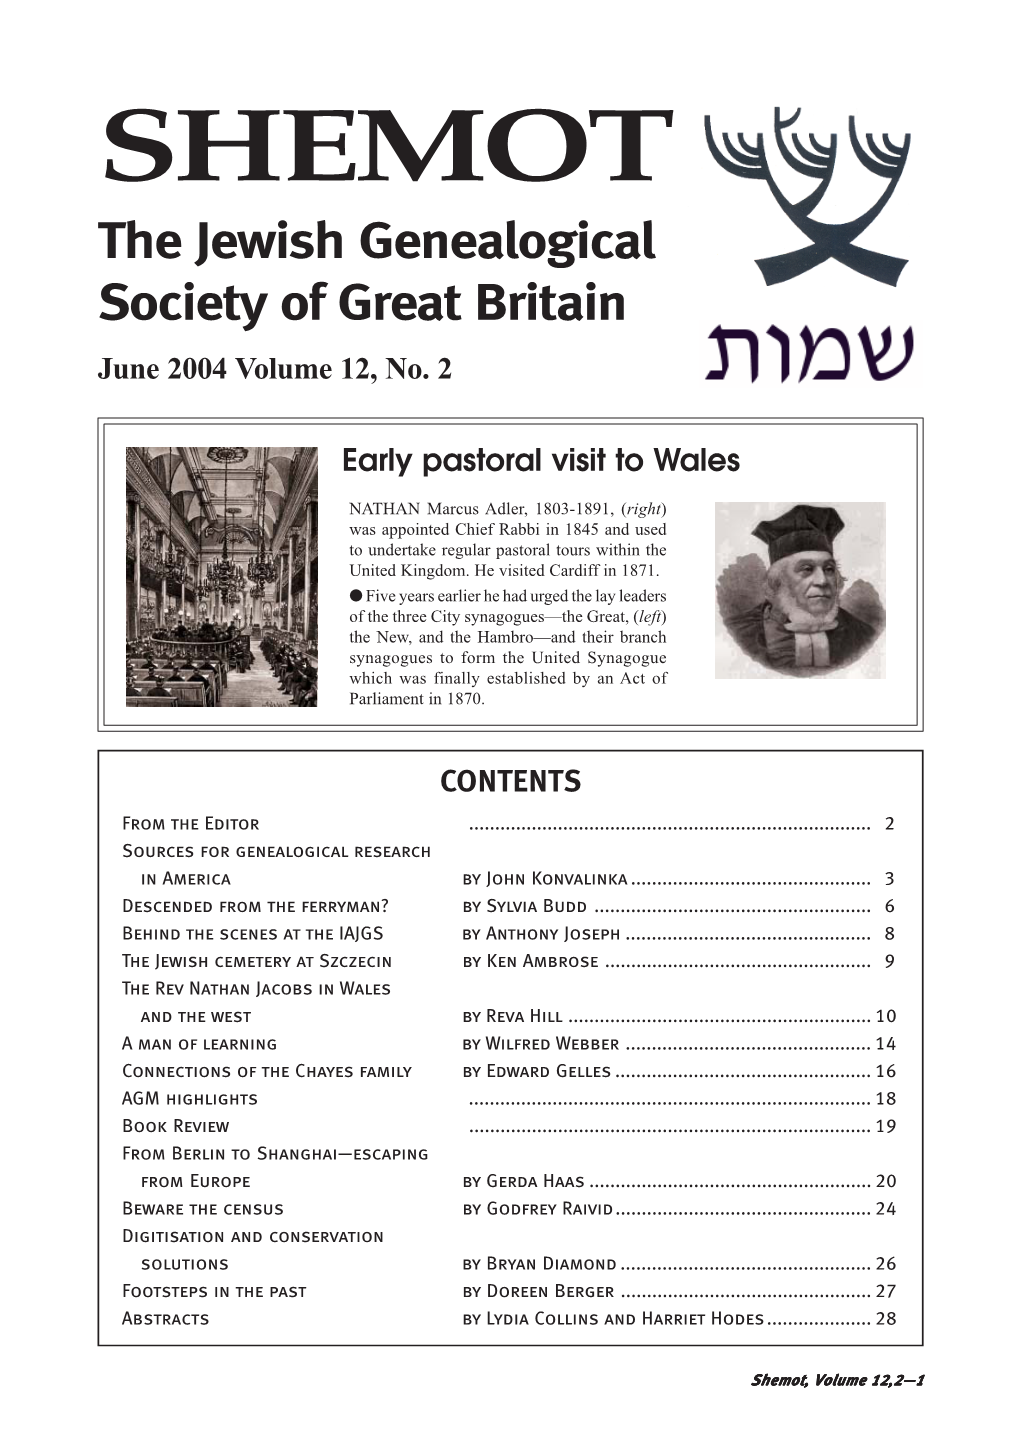 SHEMOT the Jewish Genealogical Society of Great Britain June 2004 Volume 12, No